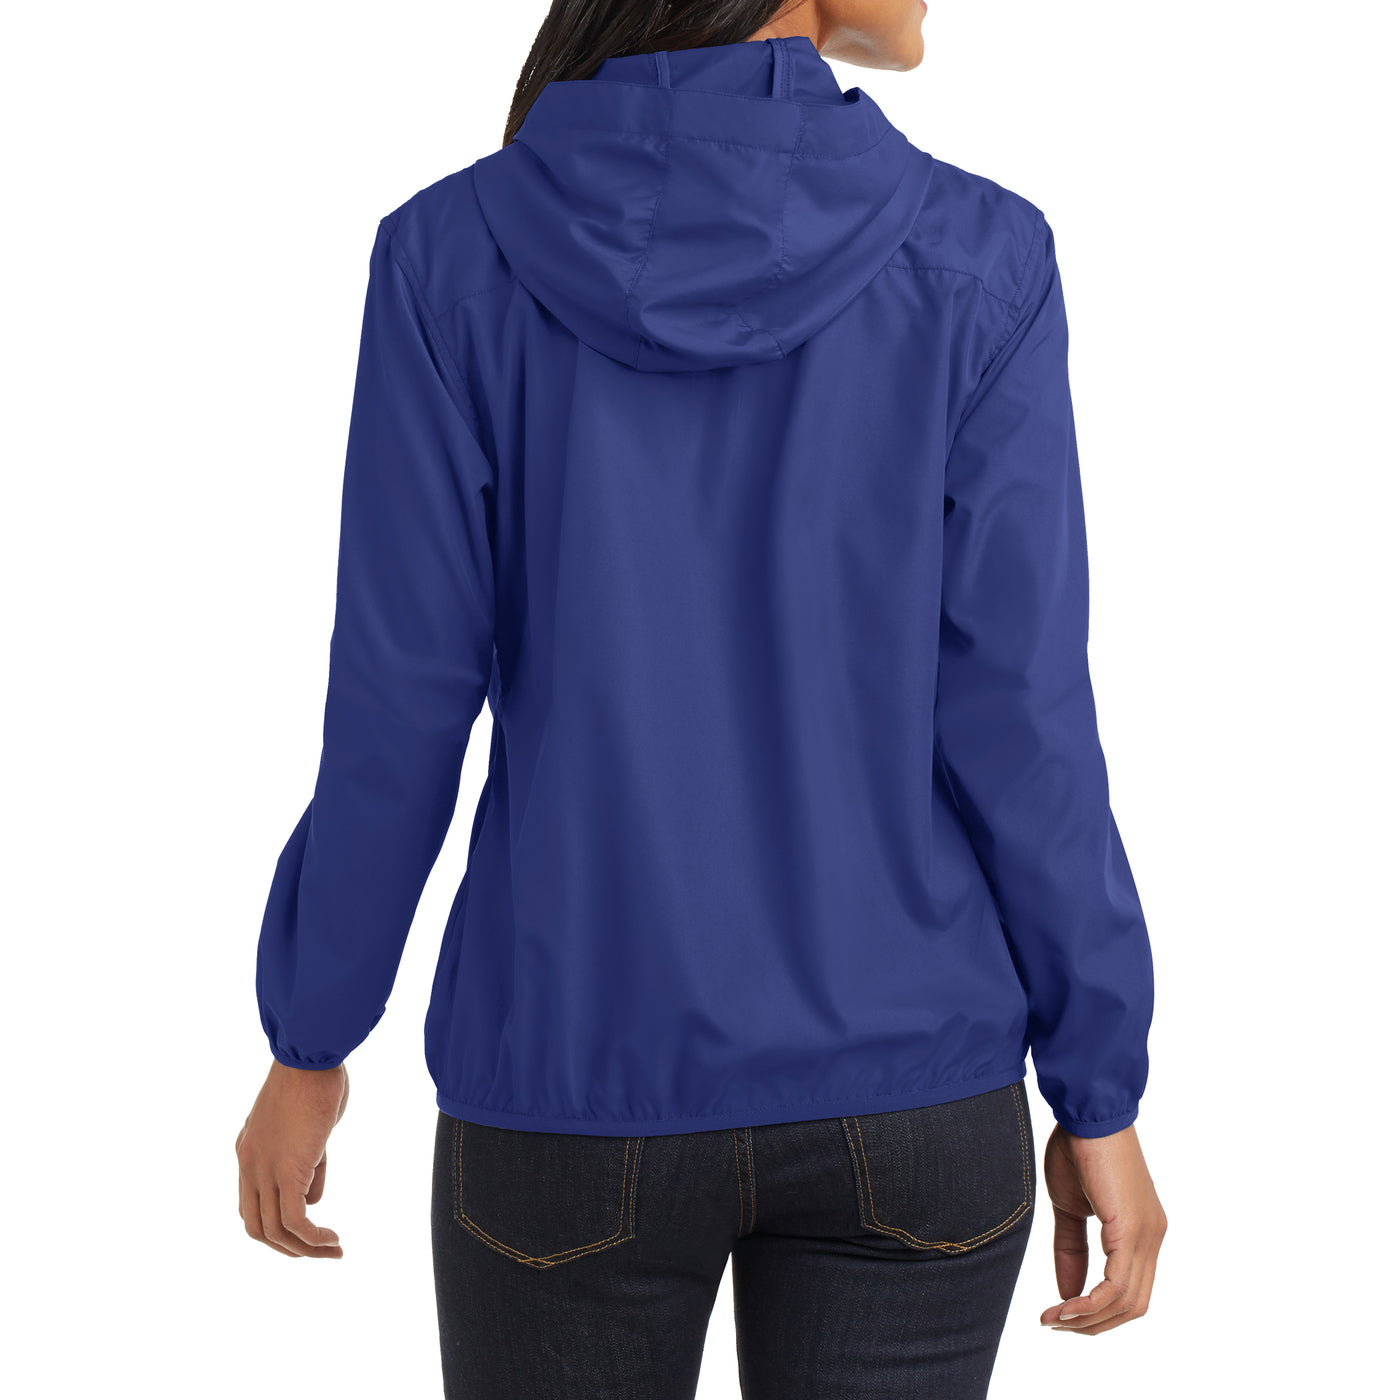 Women's Hooded Essential Jacket - Mediterranean Blue - Back